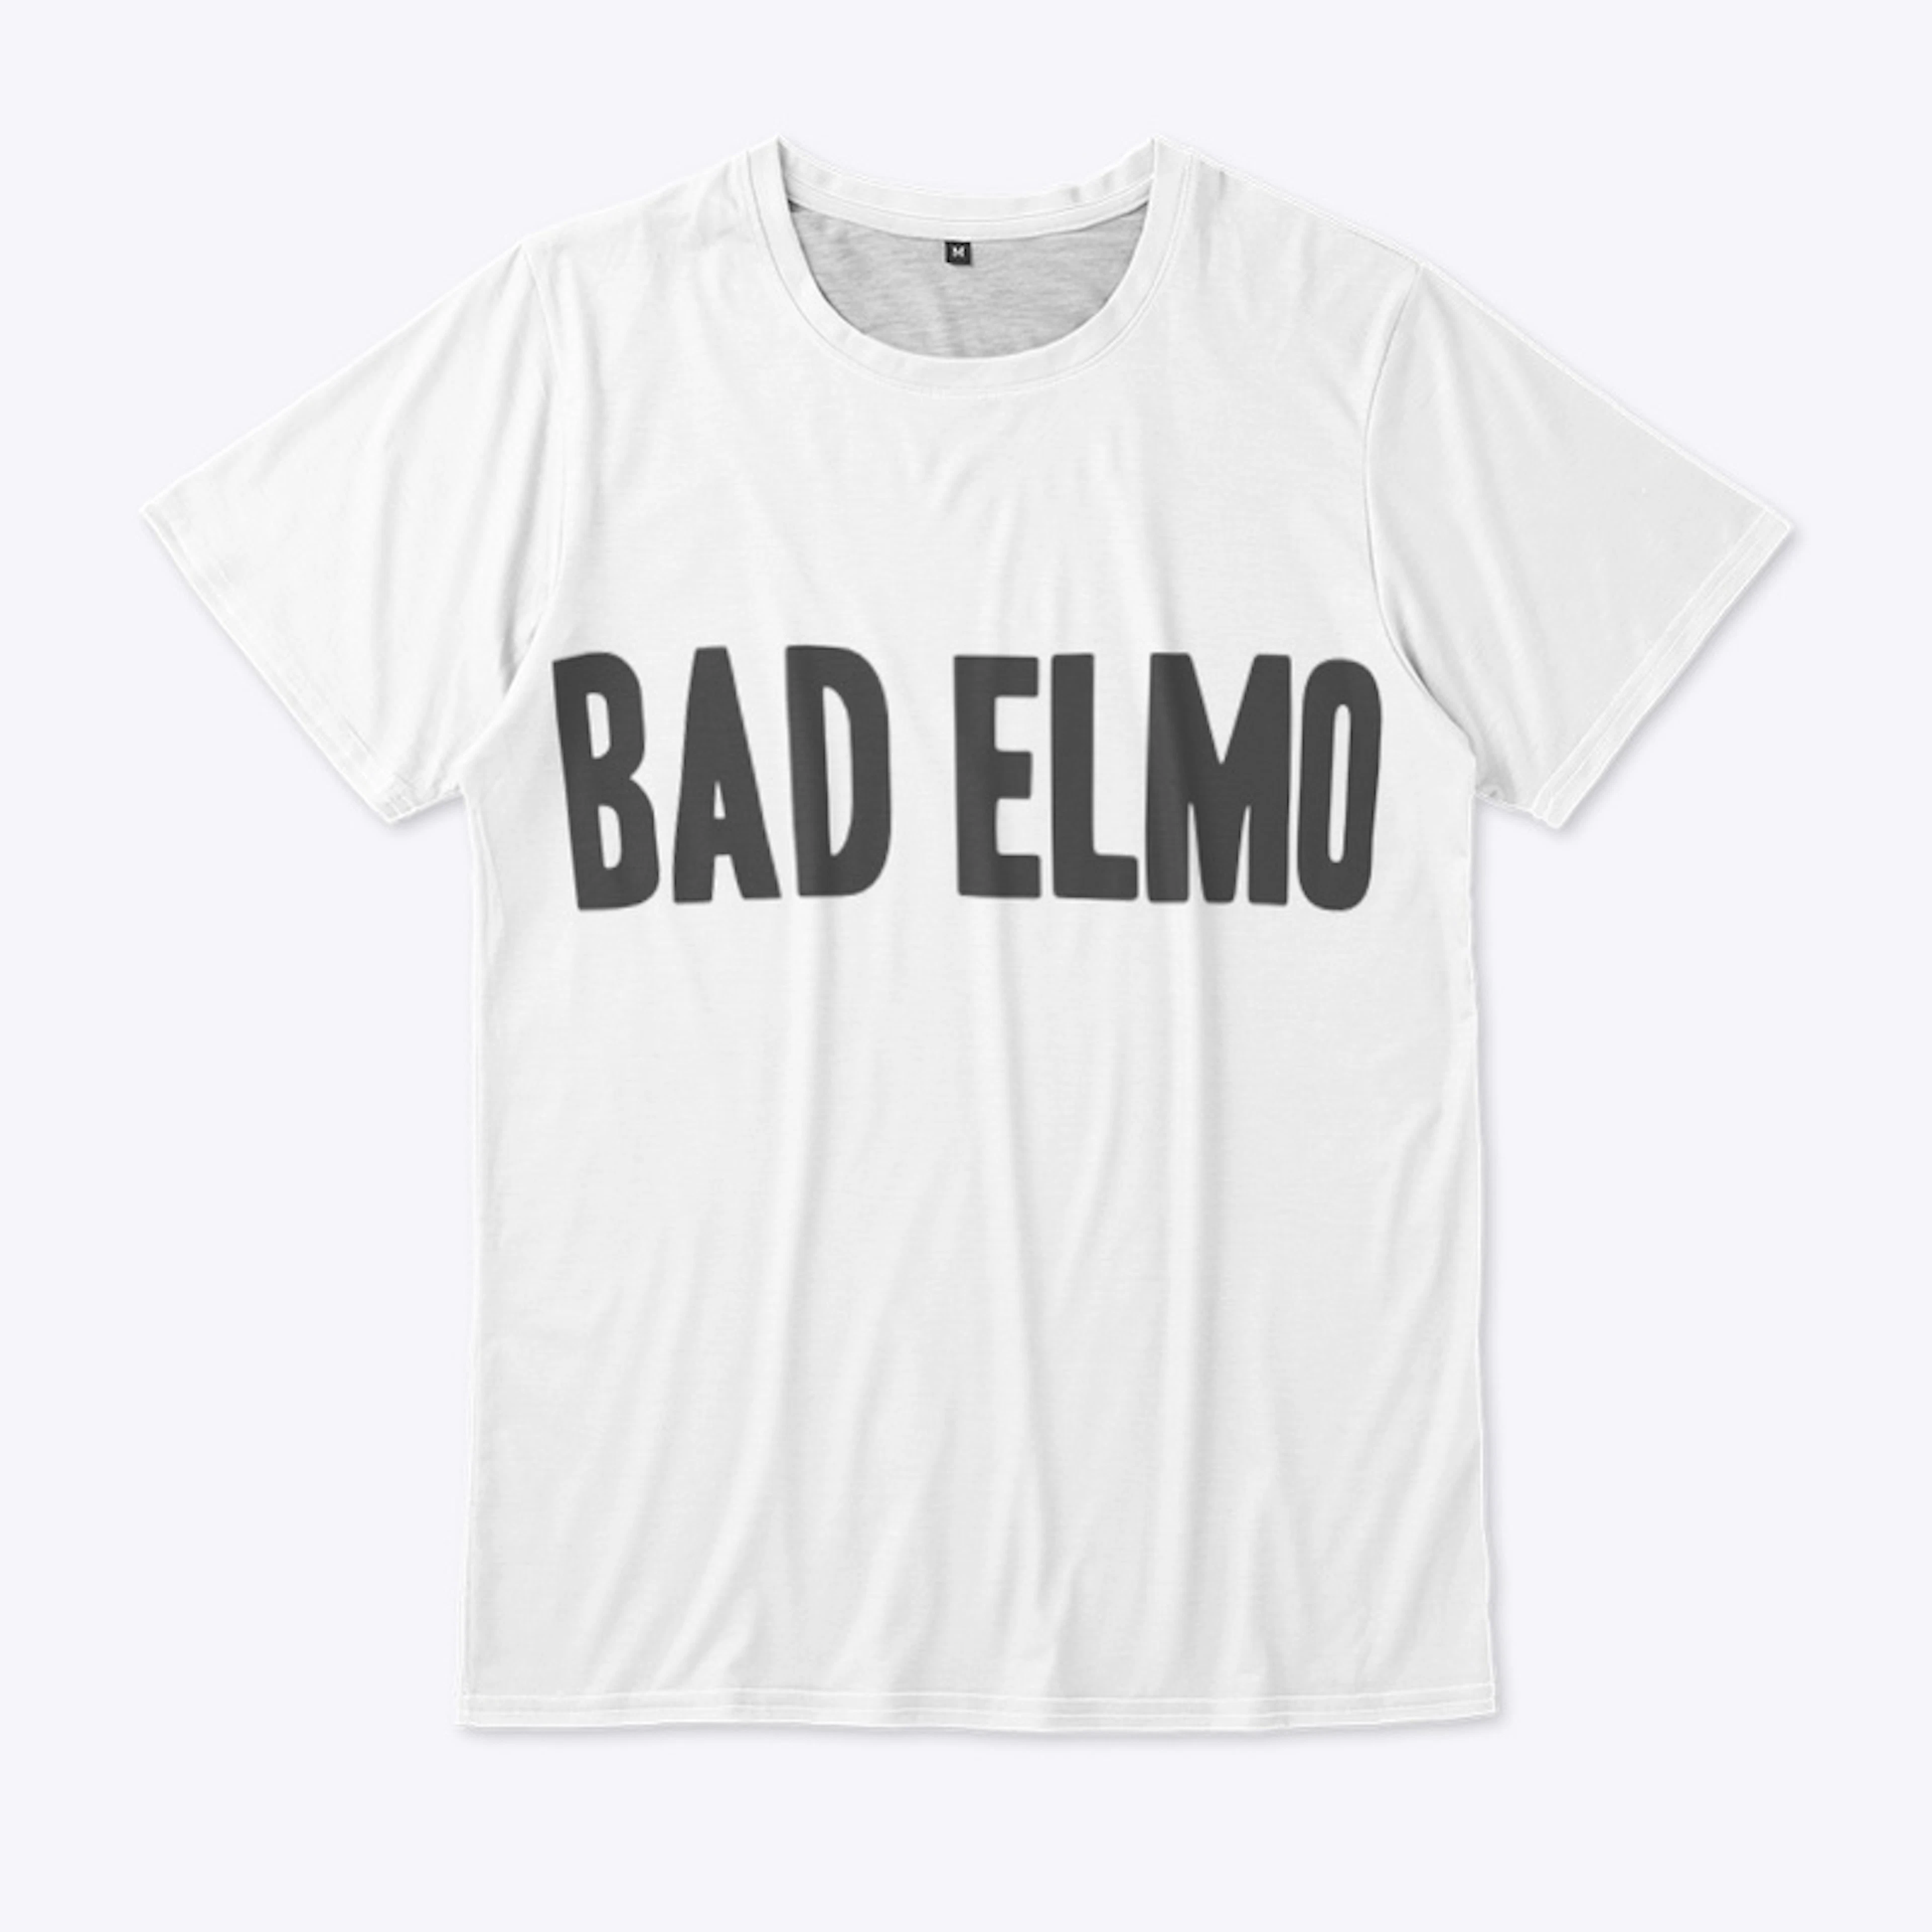 Bad Elmo Dude